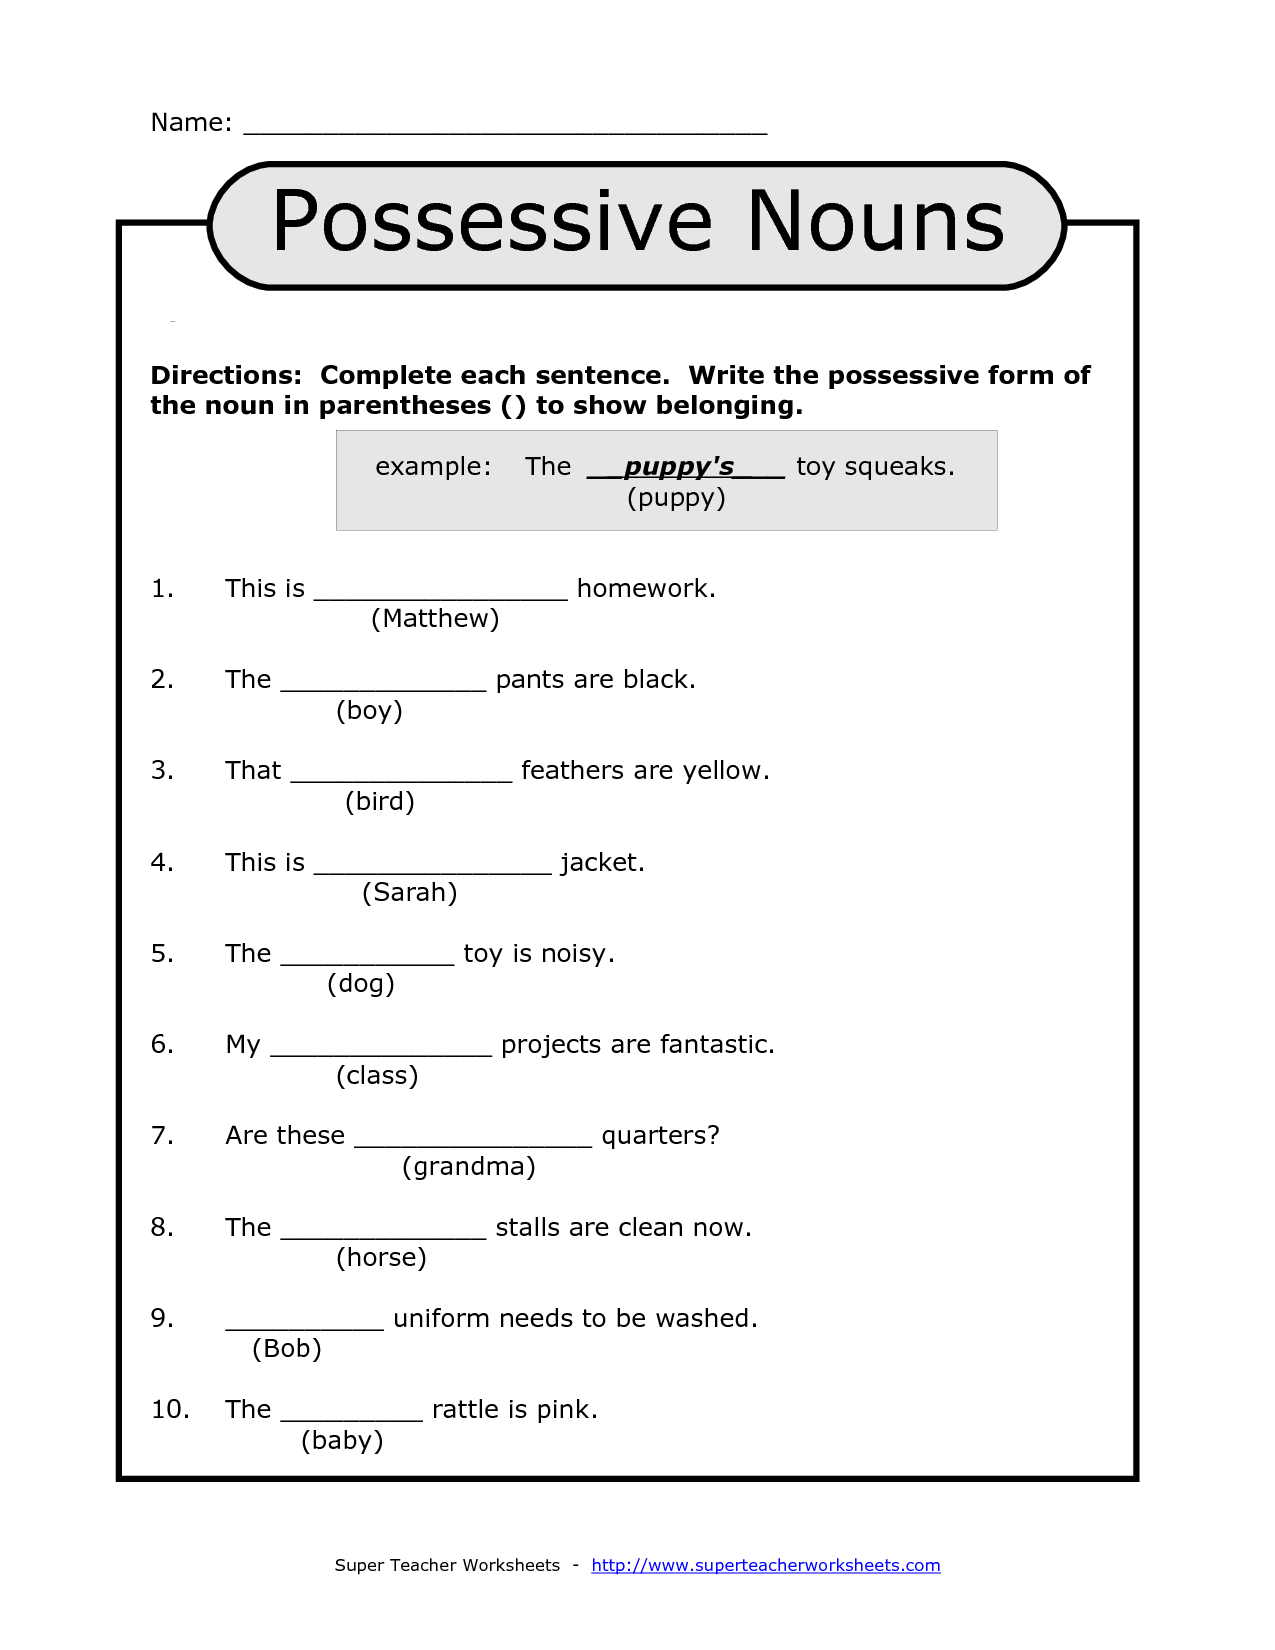 Possessive Nouns Grammar Worksheets